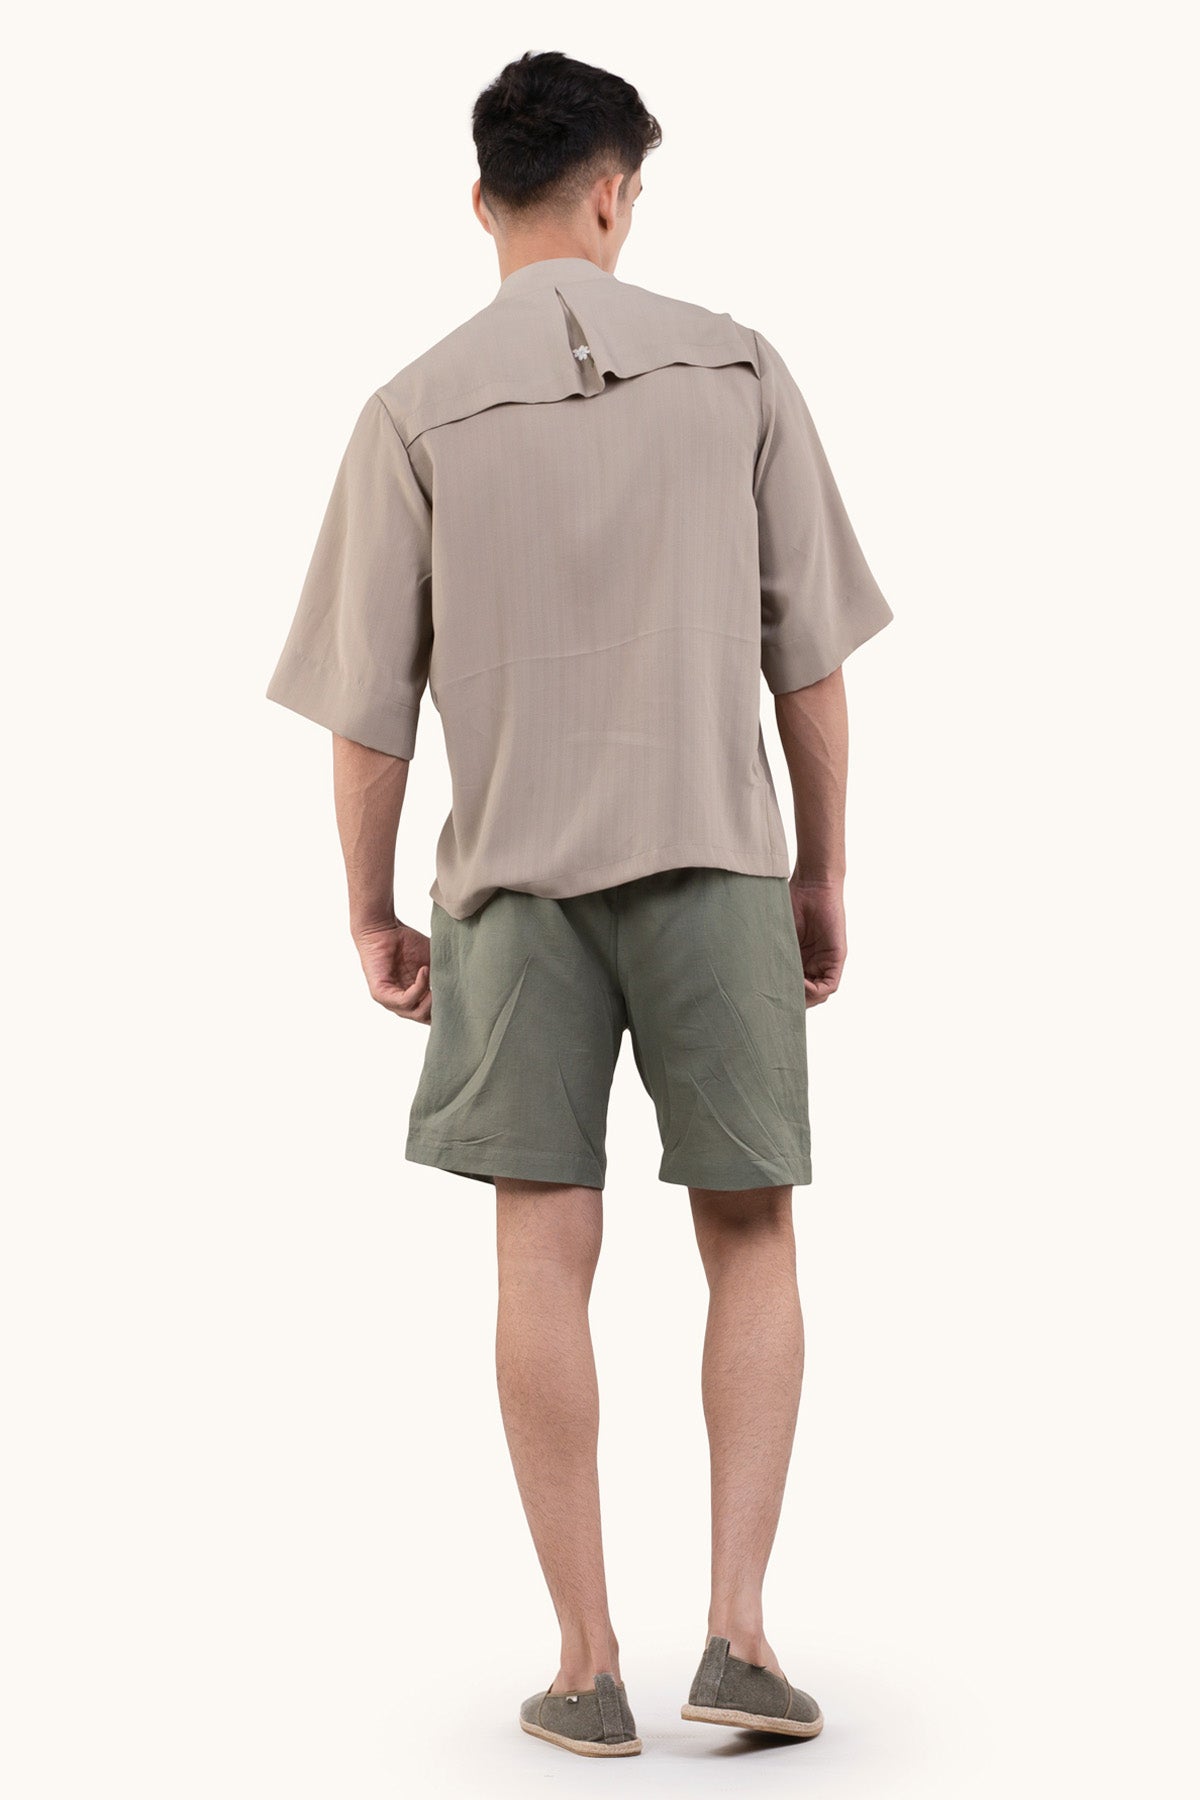 Elasticated Linen Shorts